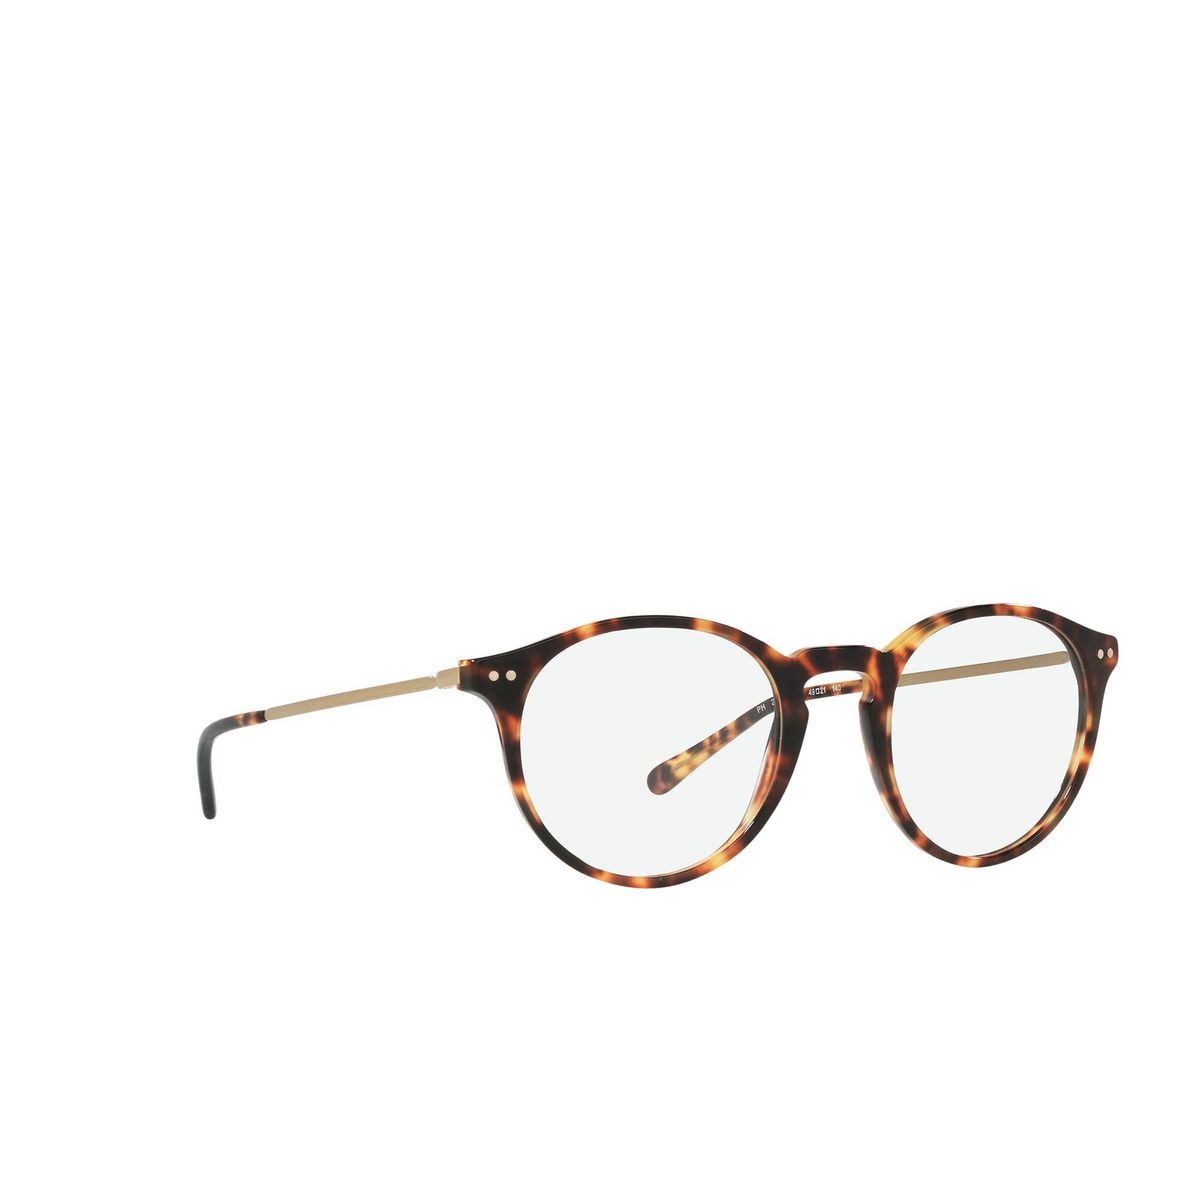 Polo Ralph Lauren® Round Eyeglasses: PH2227 color Shiny New Jerry Tortoise 5351 - three-quarters view.